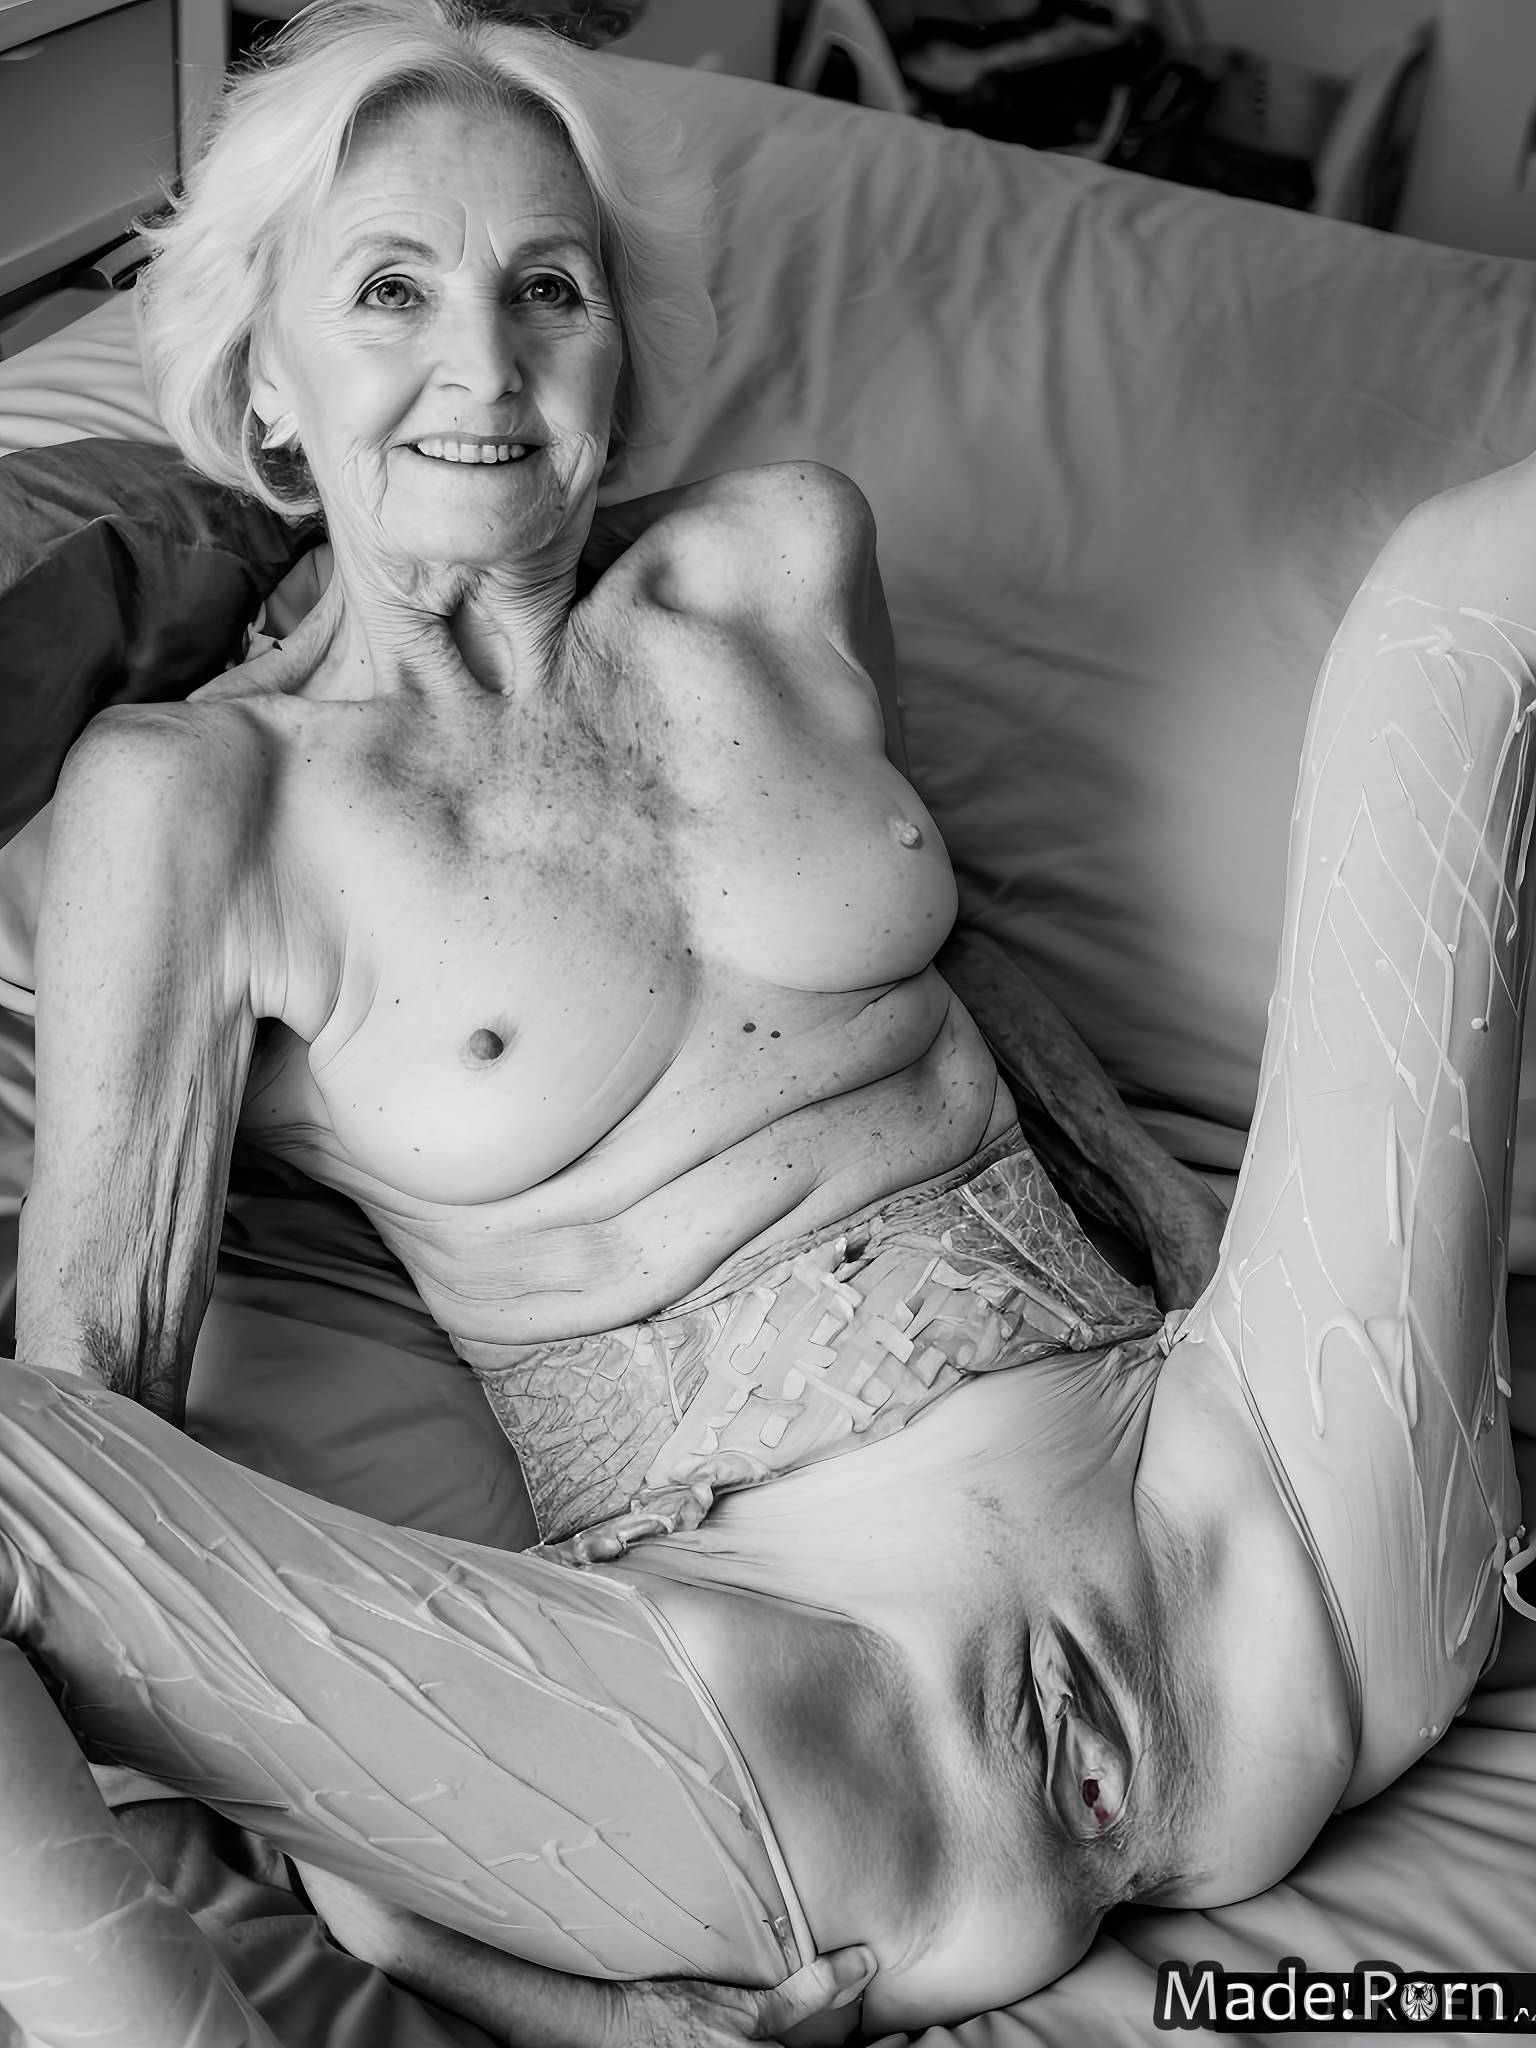 Porn Image Of Big Tits Portrait 90 Nude Nipples Bedroom Long Legs